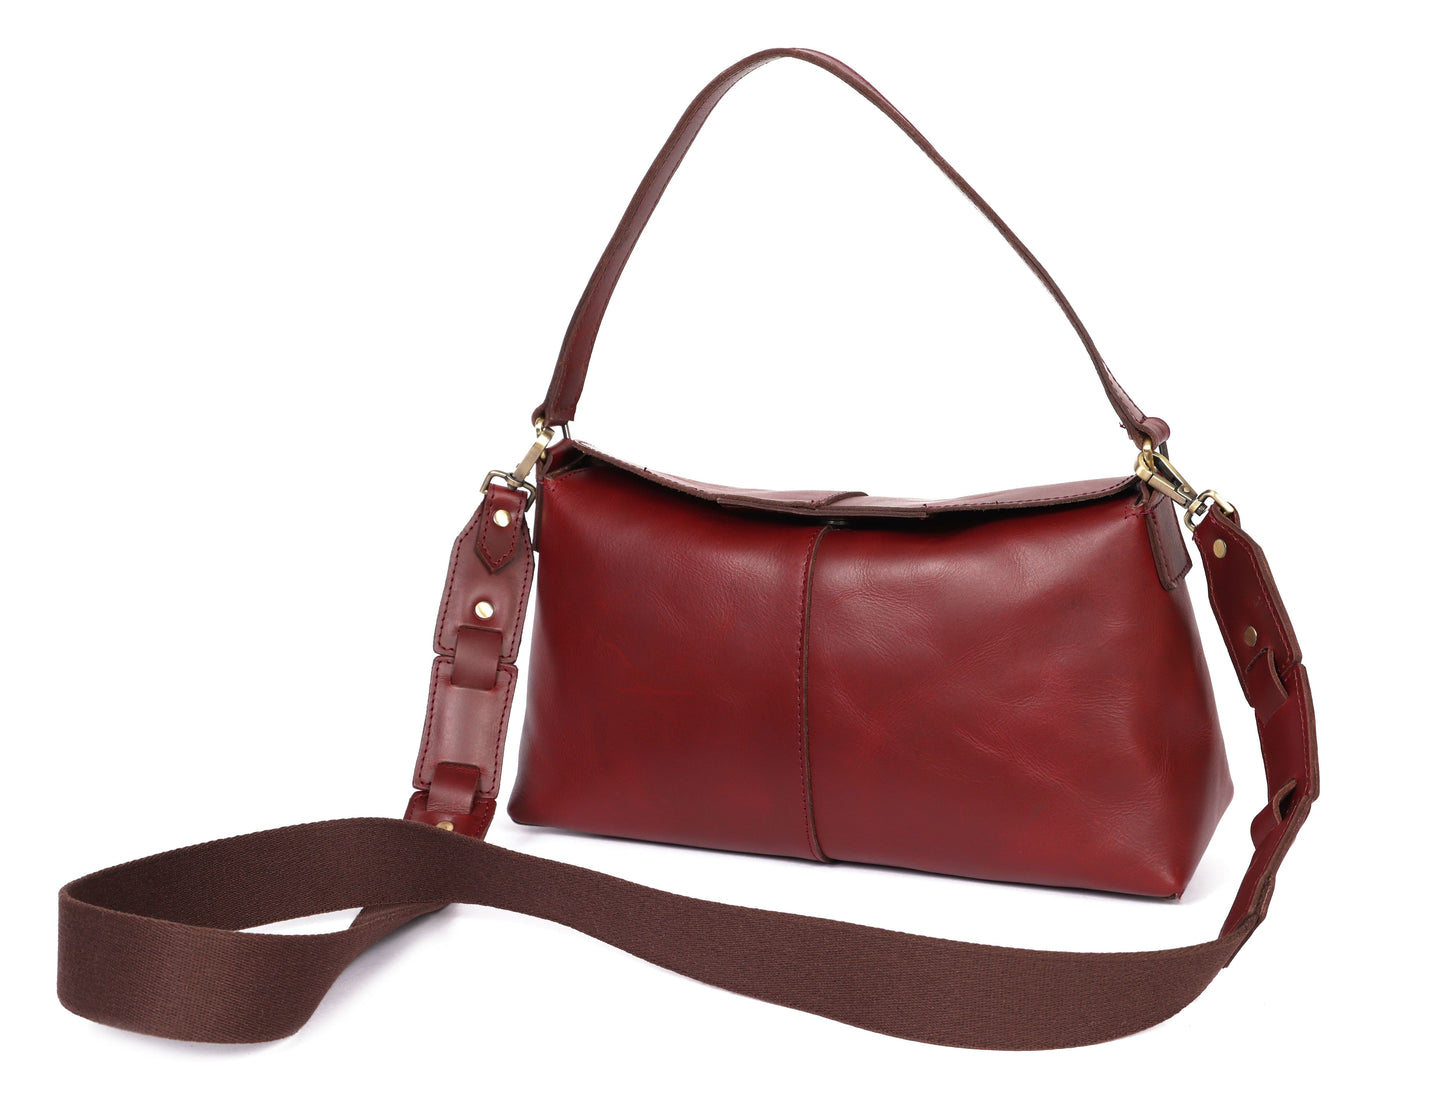 Exquisite Burgundy Leather Sling Bag - CELTICINDIA